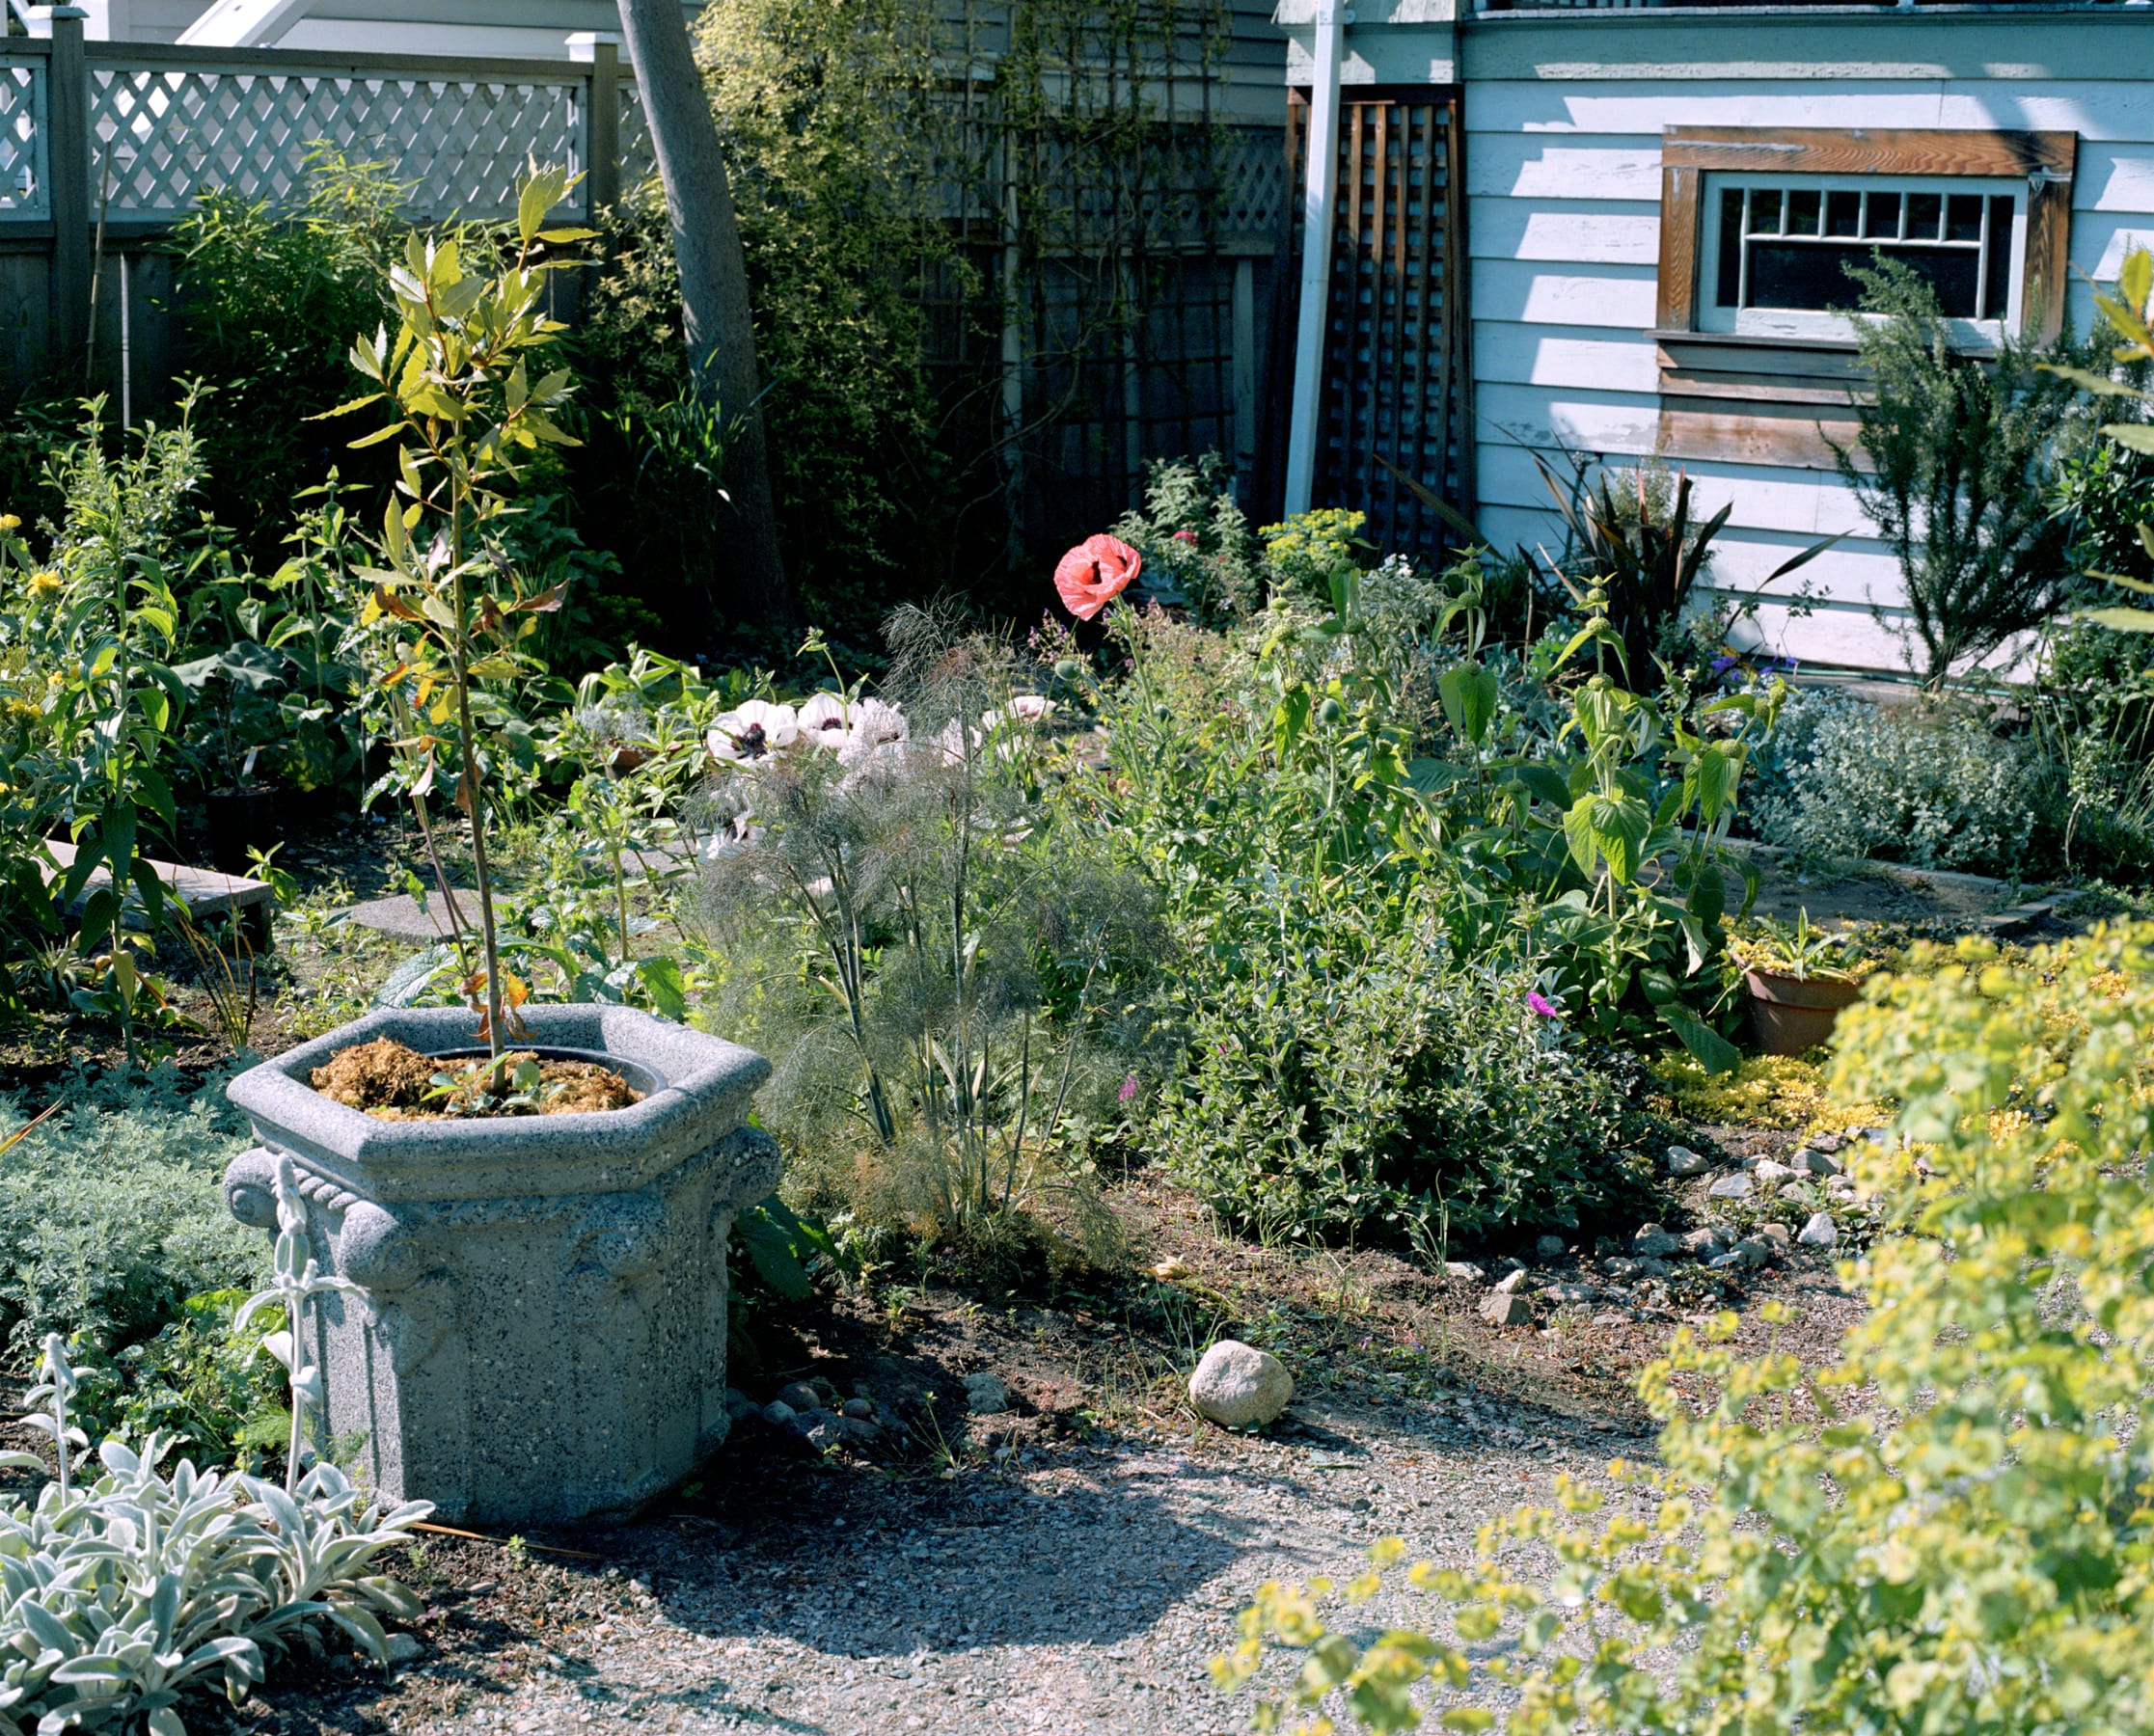 Jeff Wall, Poppies in a Garden, 2006